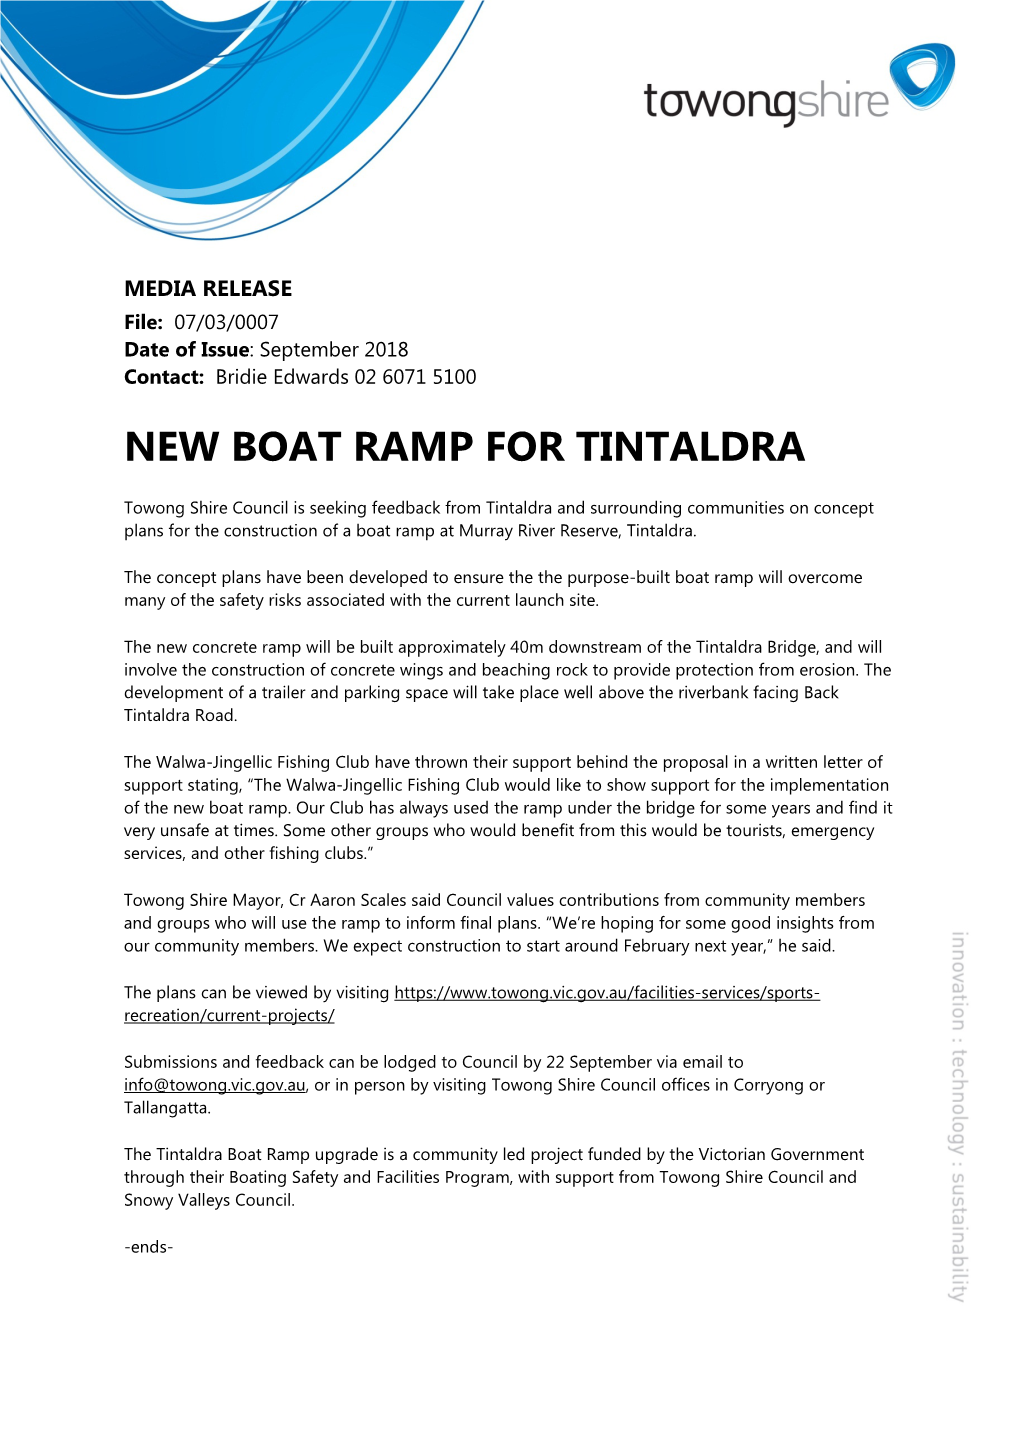 New Boat Ramp for Tintaldra